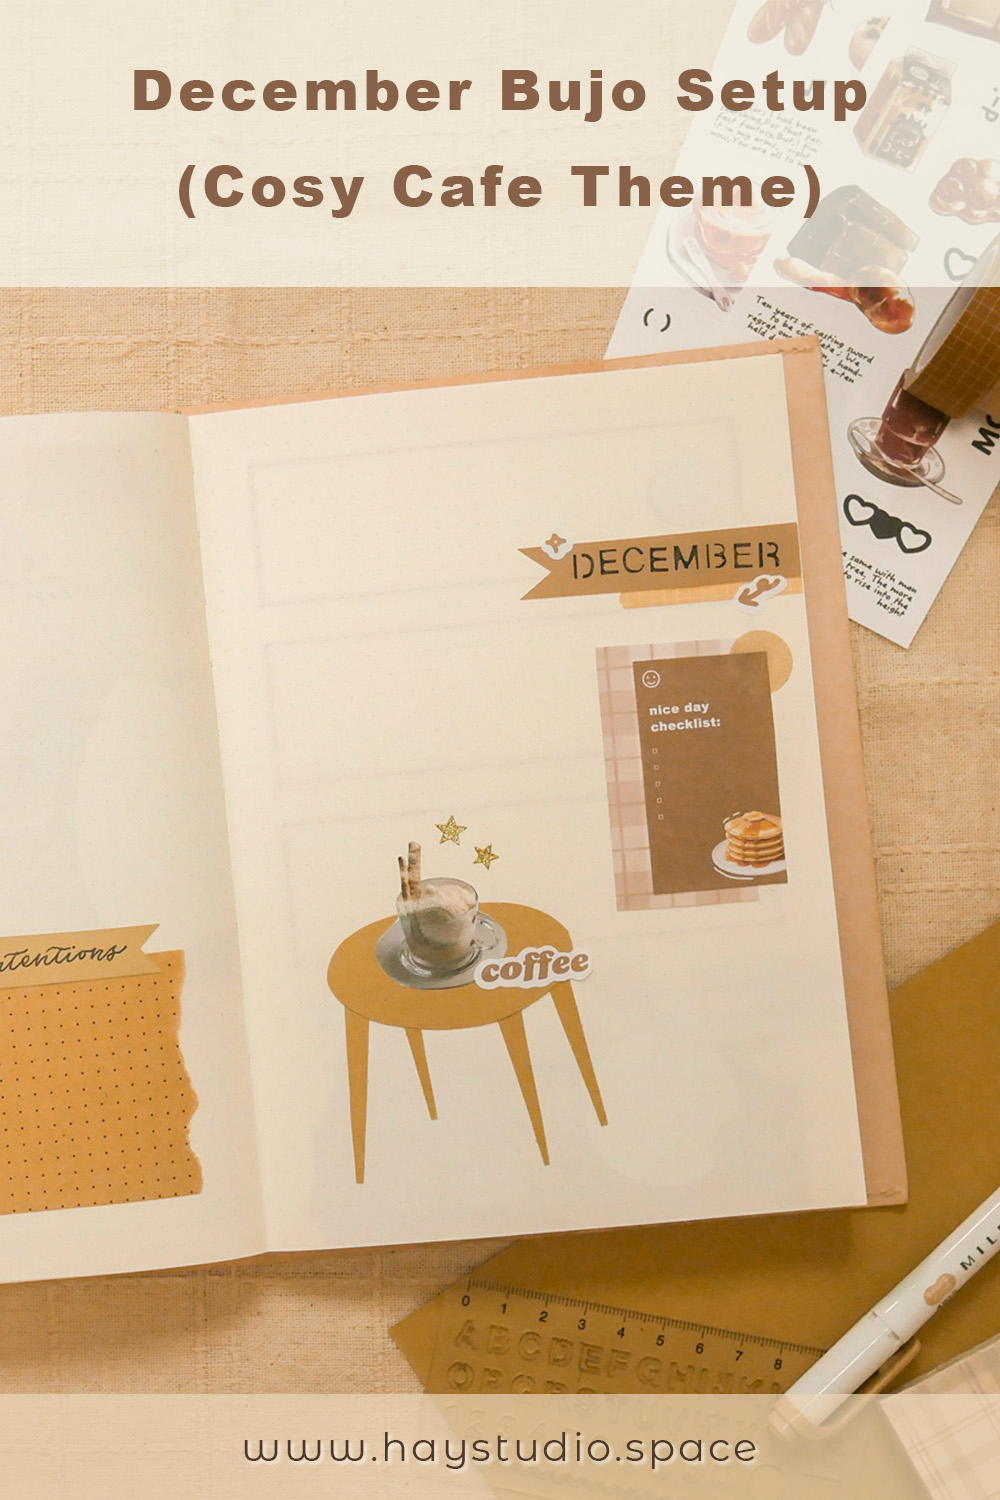 December Bujo Setup - Cosy Cafe Theme (Free Printable!)